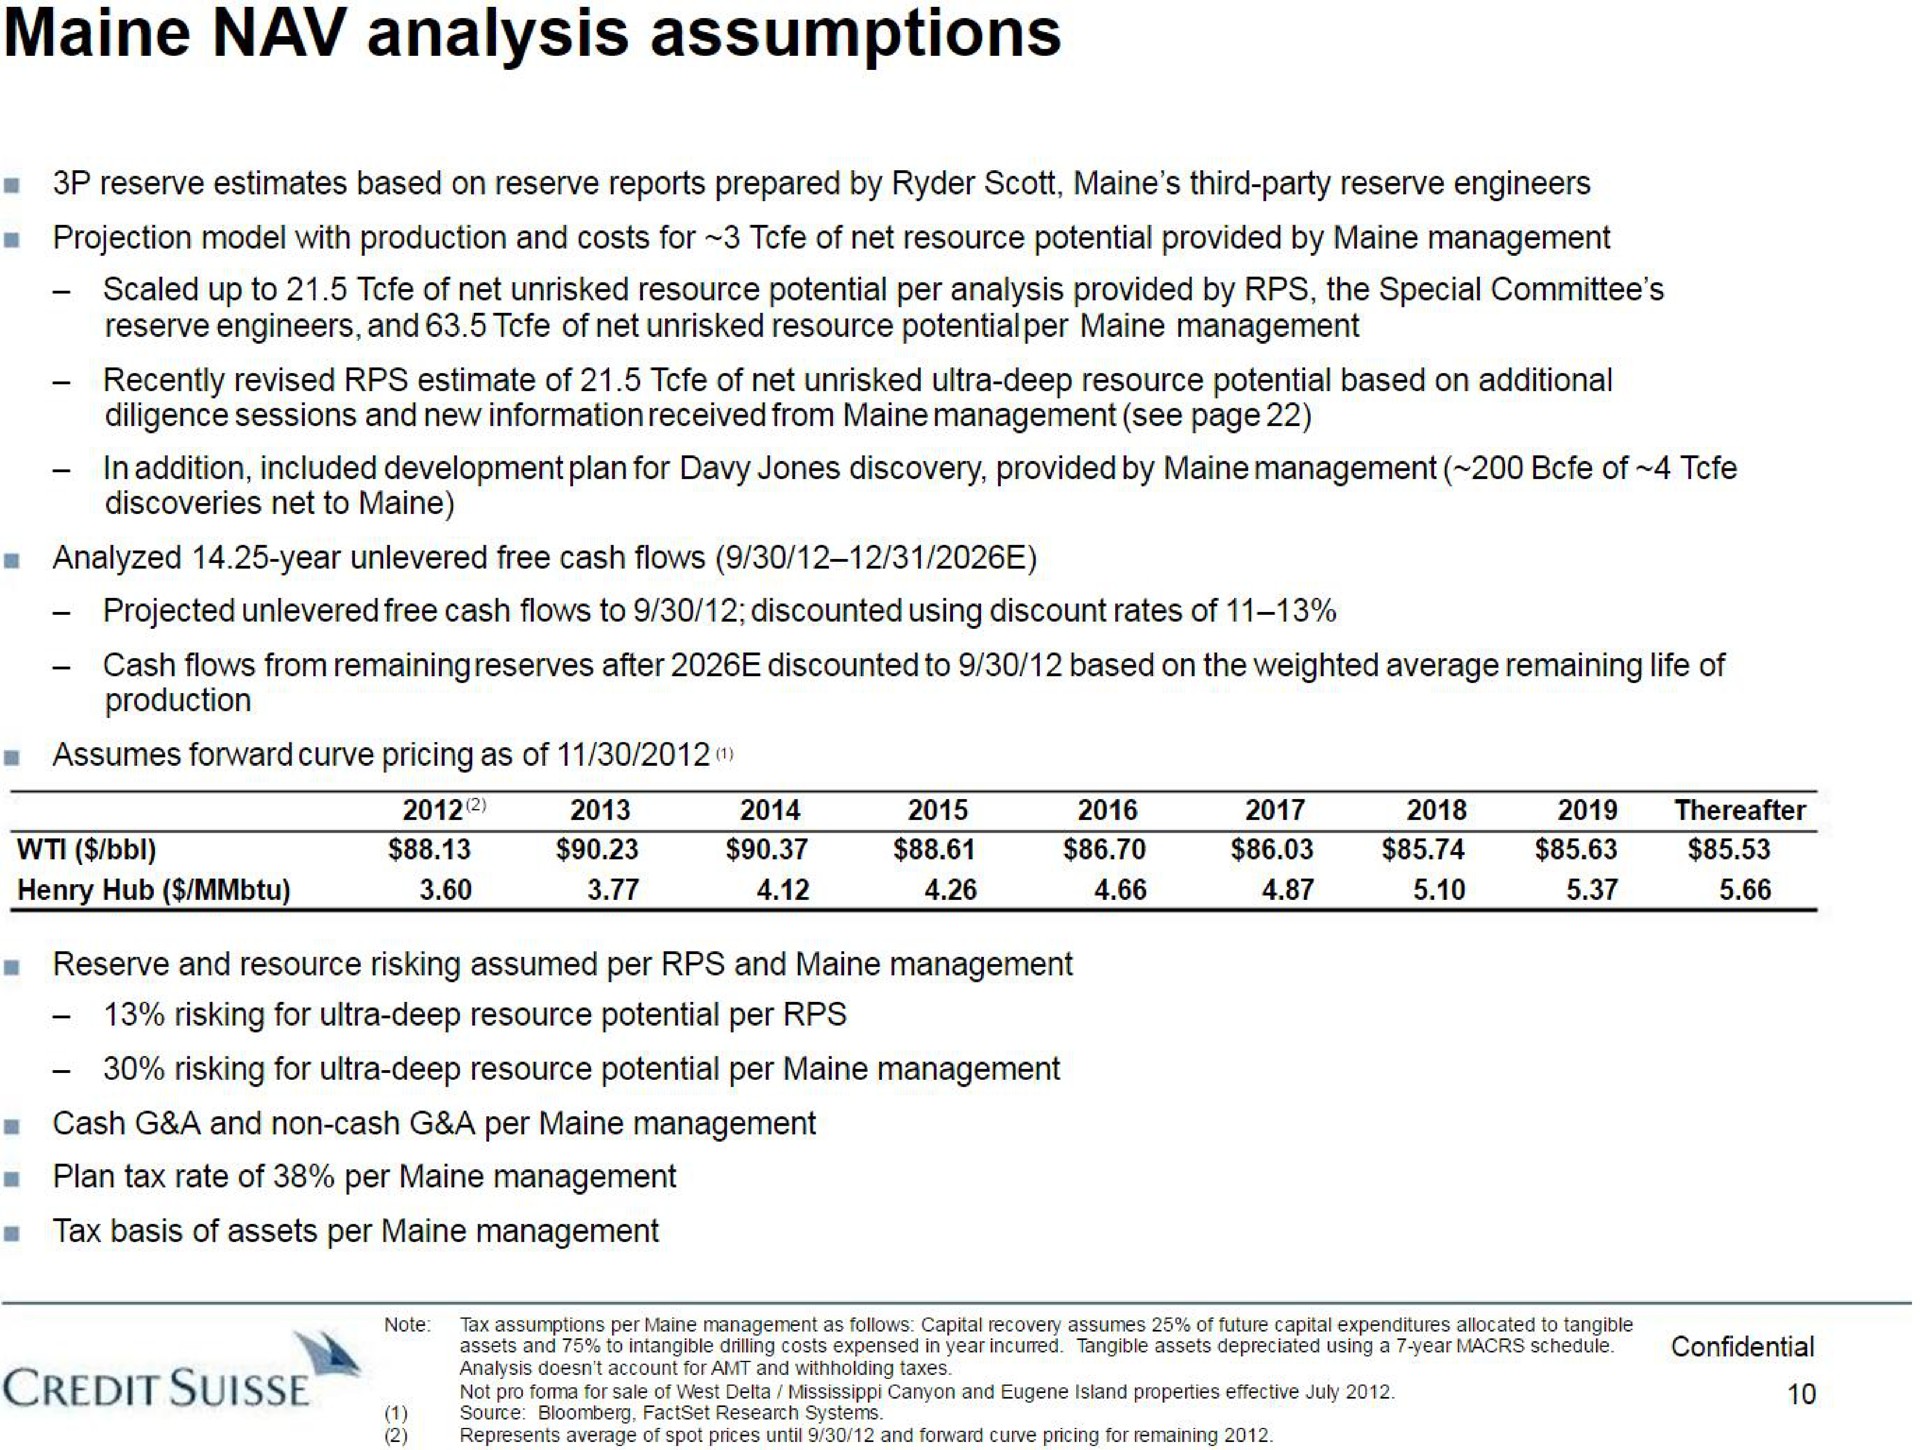 analysis assumptions | Credit Suisse